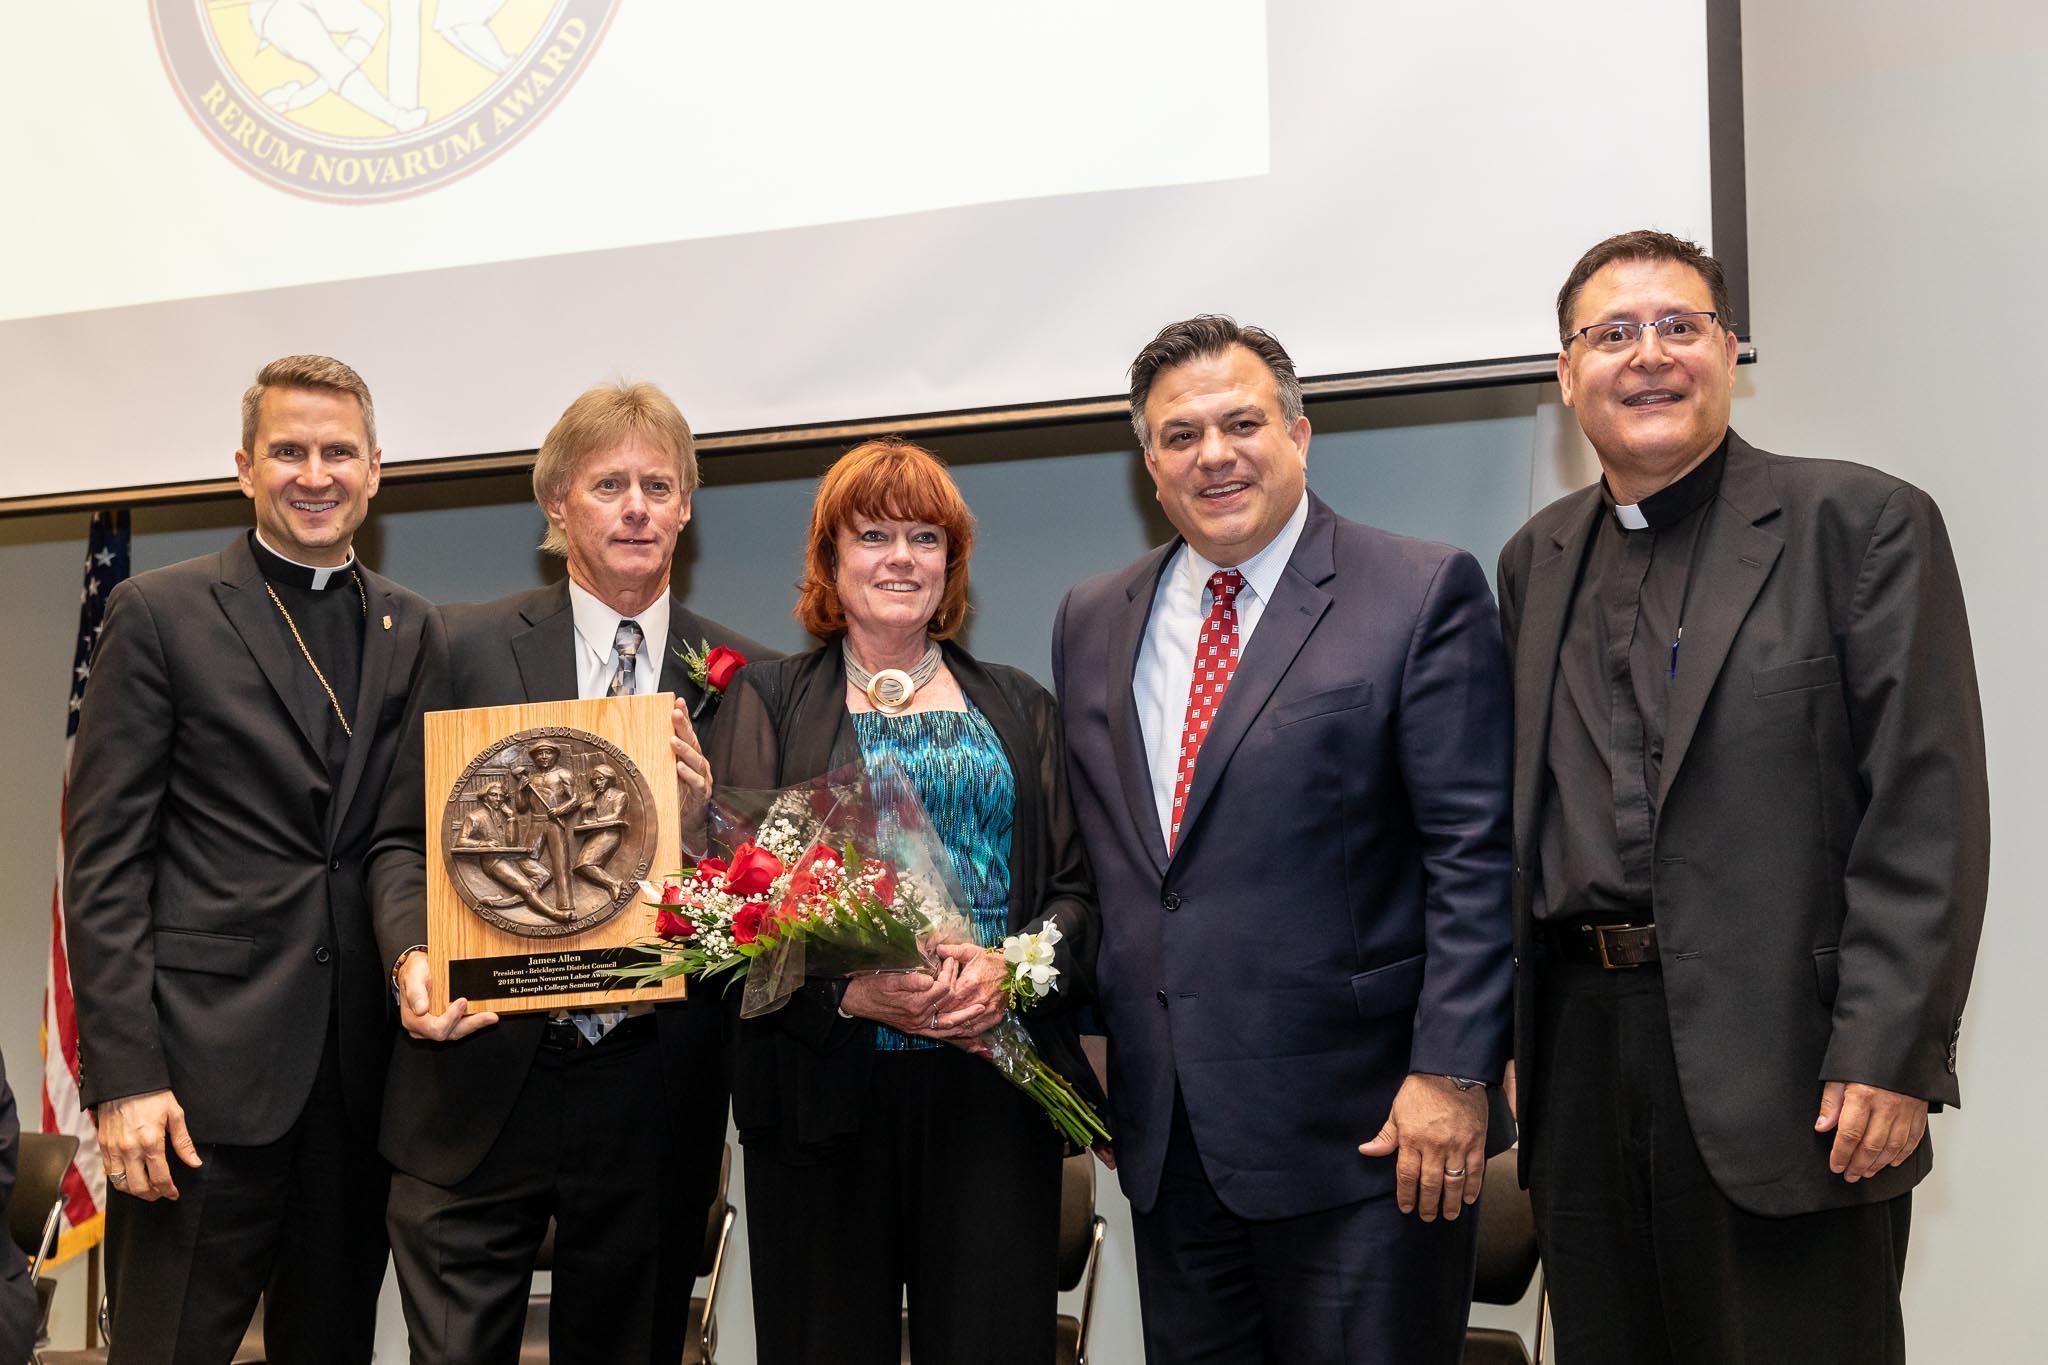 ADC President Jim Allen ReceiveS The Rerum Novarum Award  